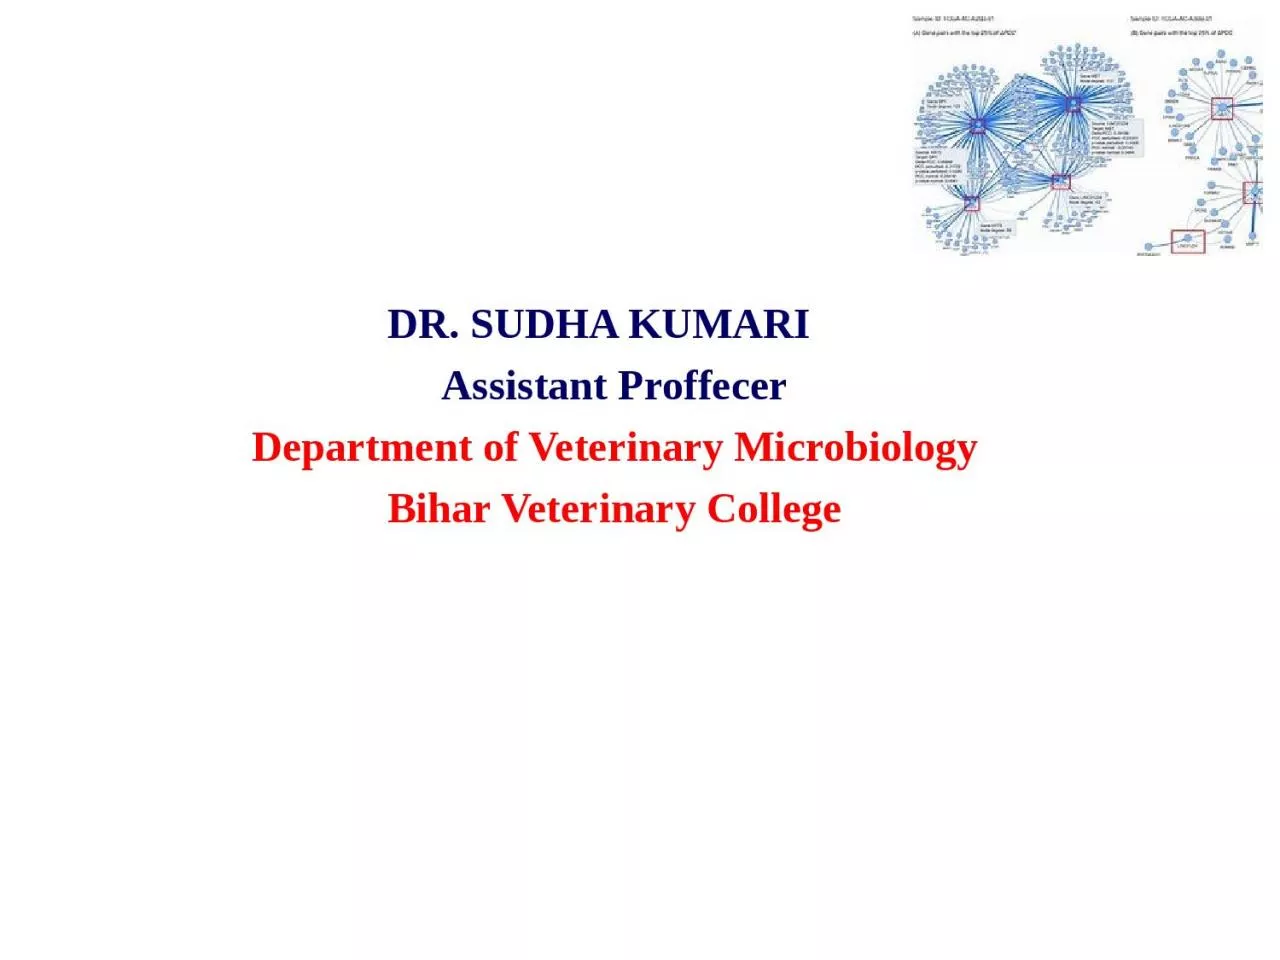 DR. SUDHA KUMARI    Assistant Proffecer